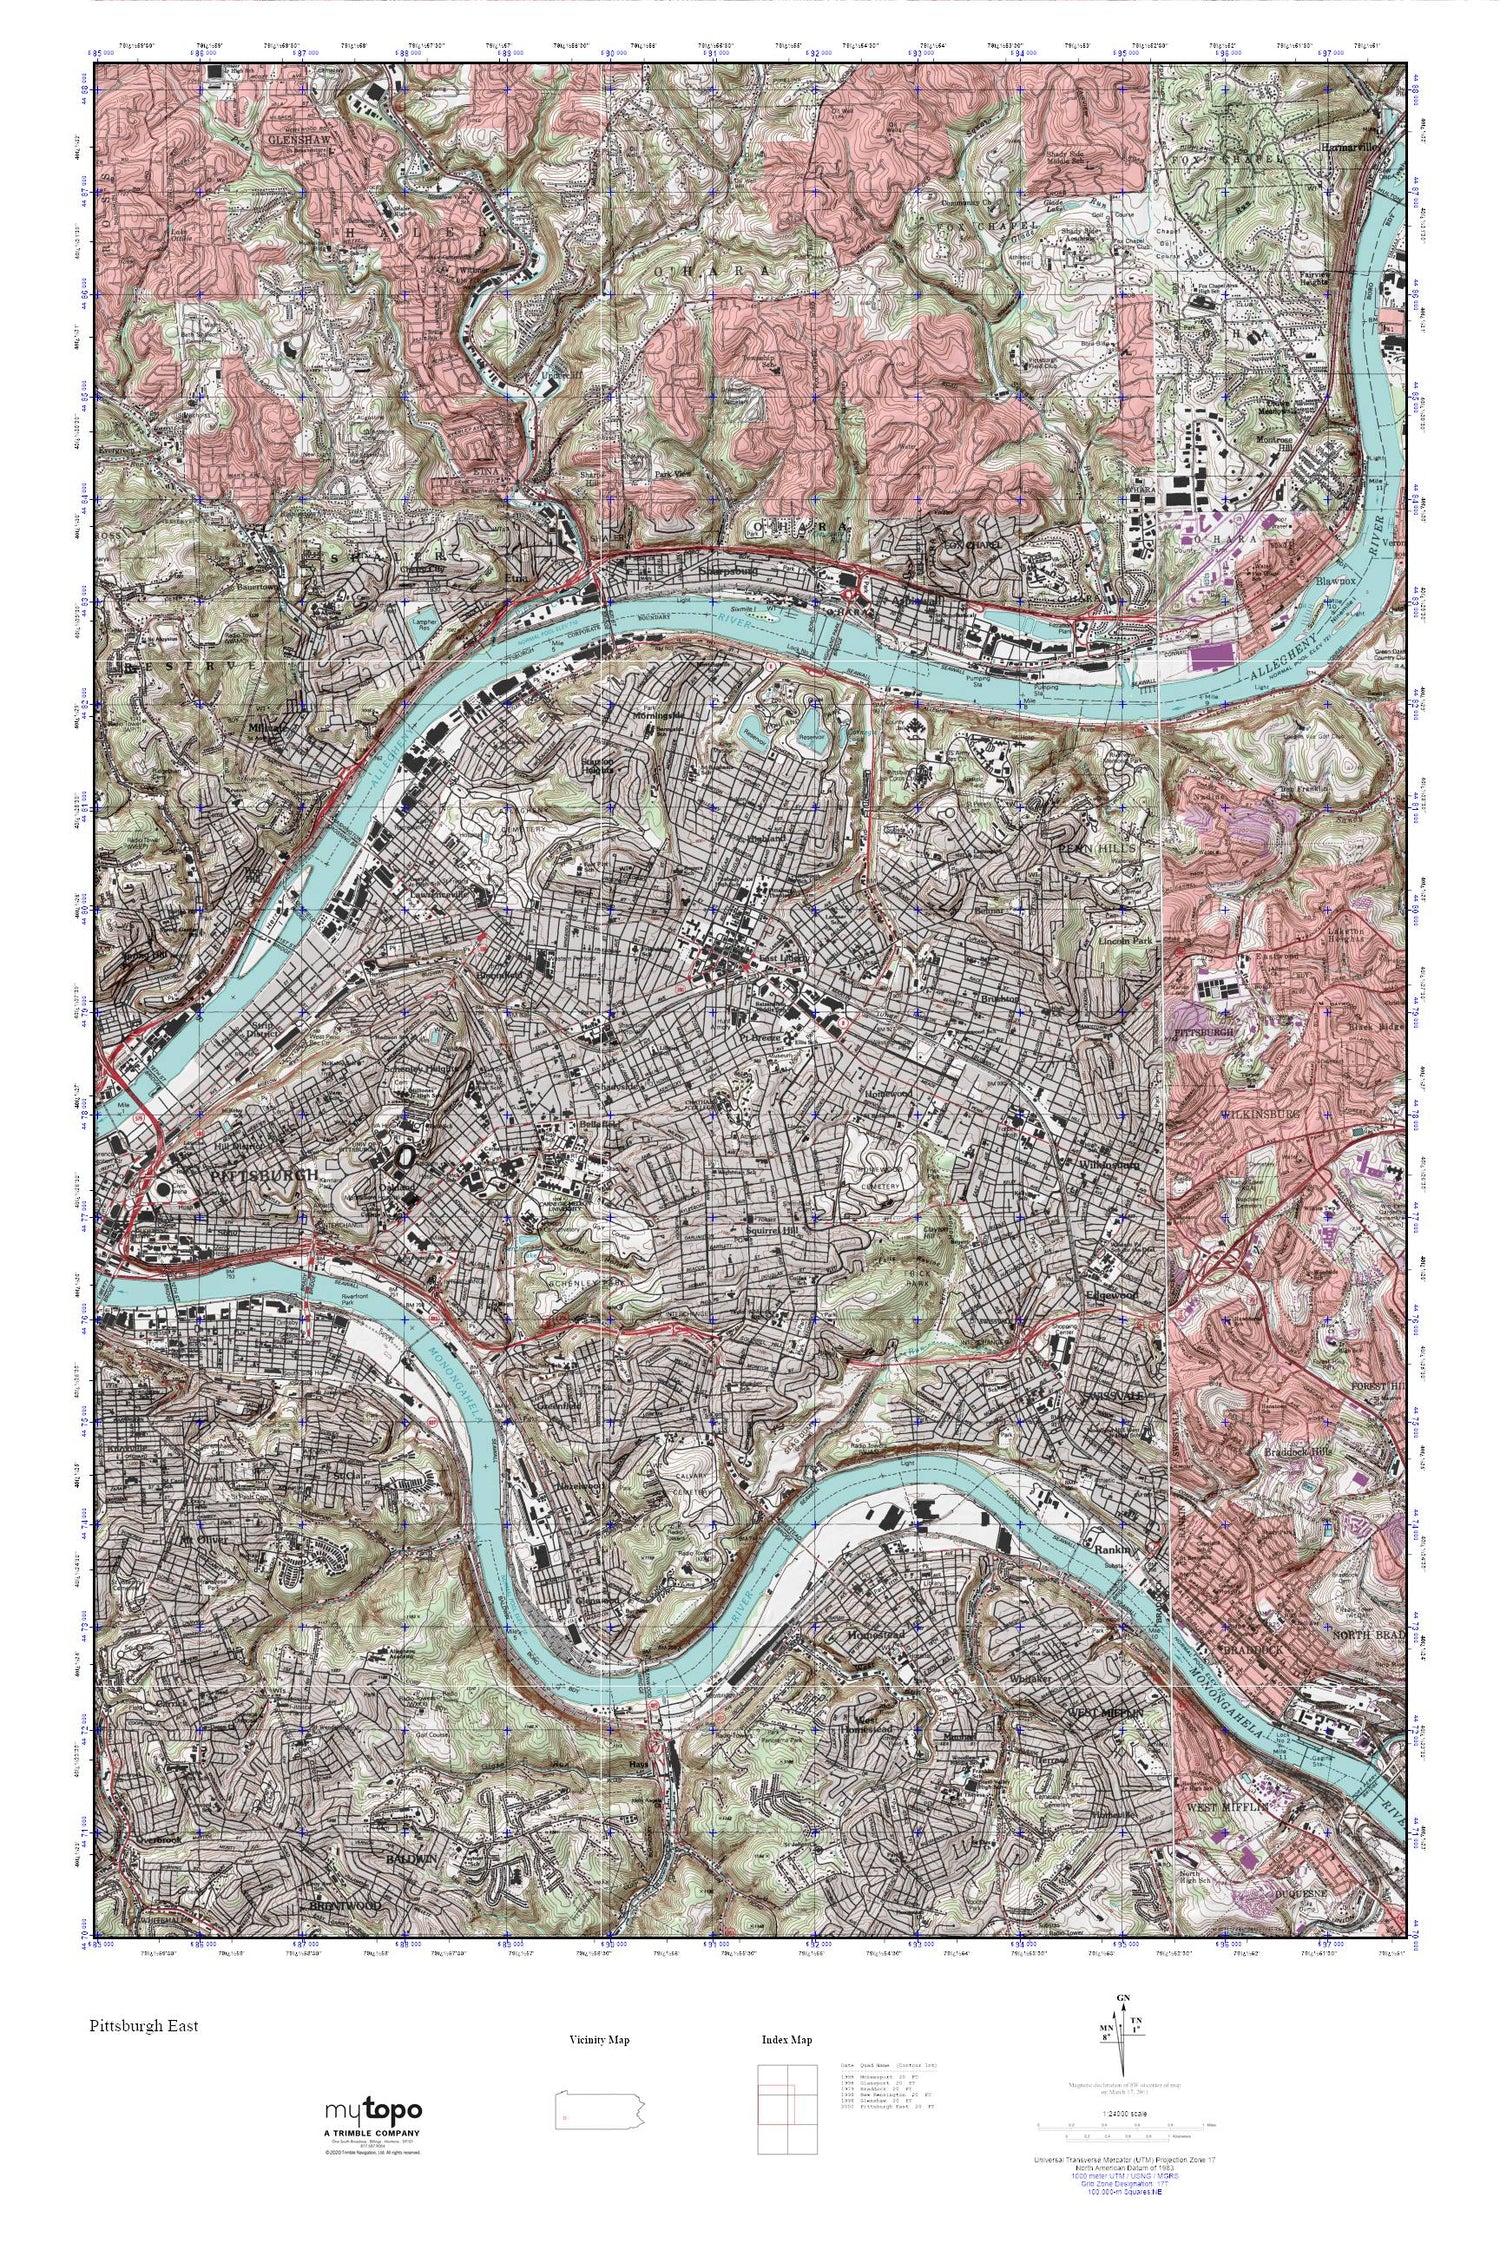 Pittsburgh East MyTopo Explorer Series Map Image